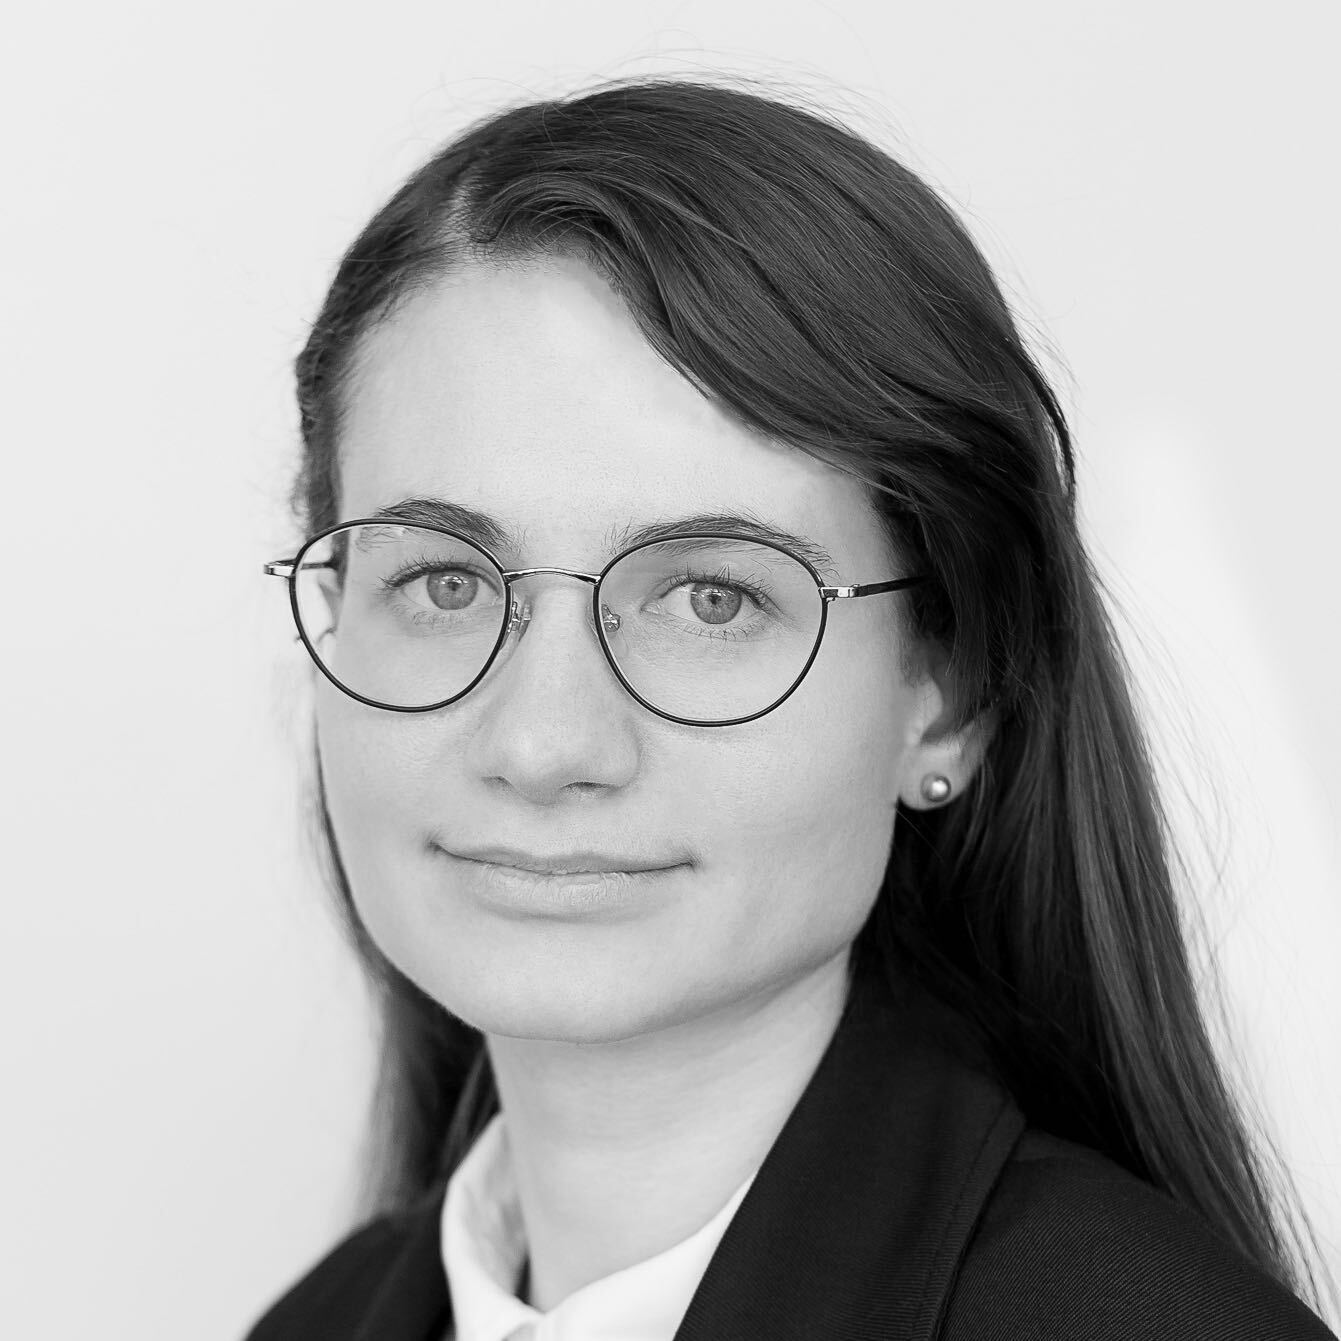 Profile Picture's of Stefaniia Ivashchenko